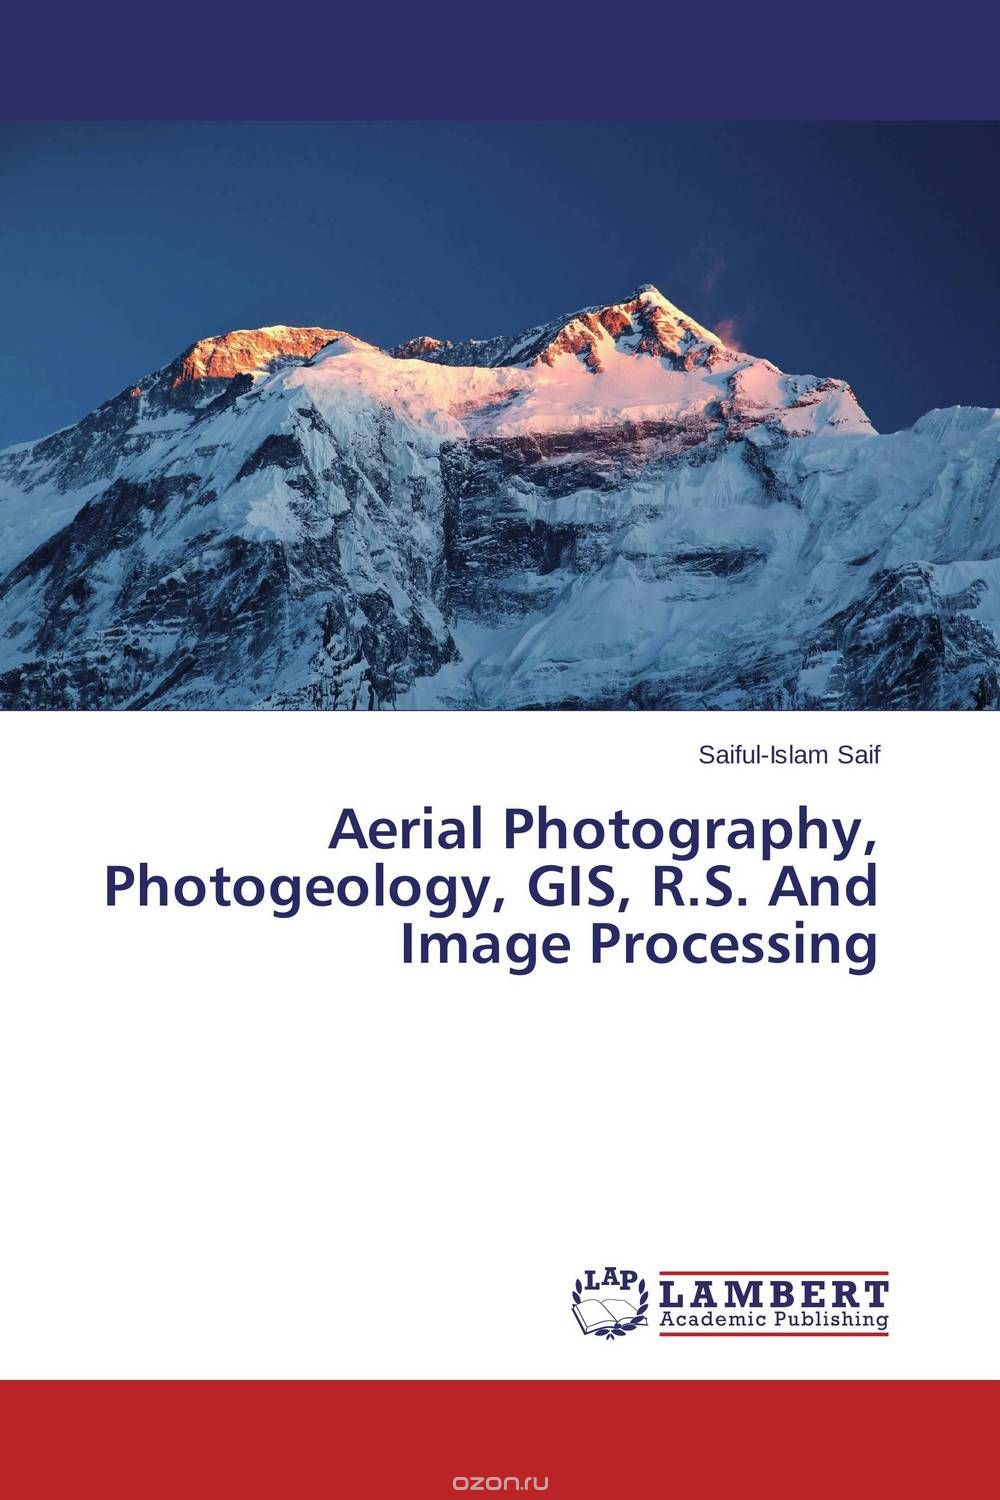 Скачать книгу "Aerial Photography, Photogeology, GIS, R.S. And Image Processing"